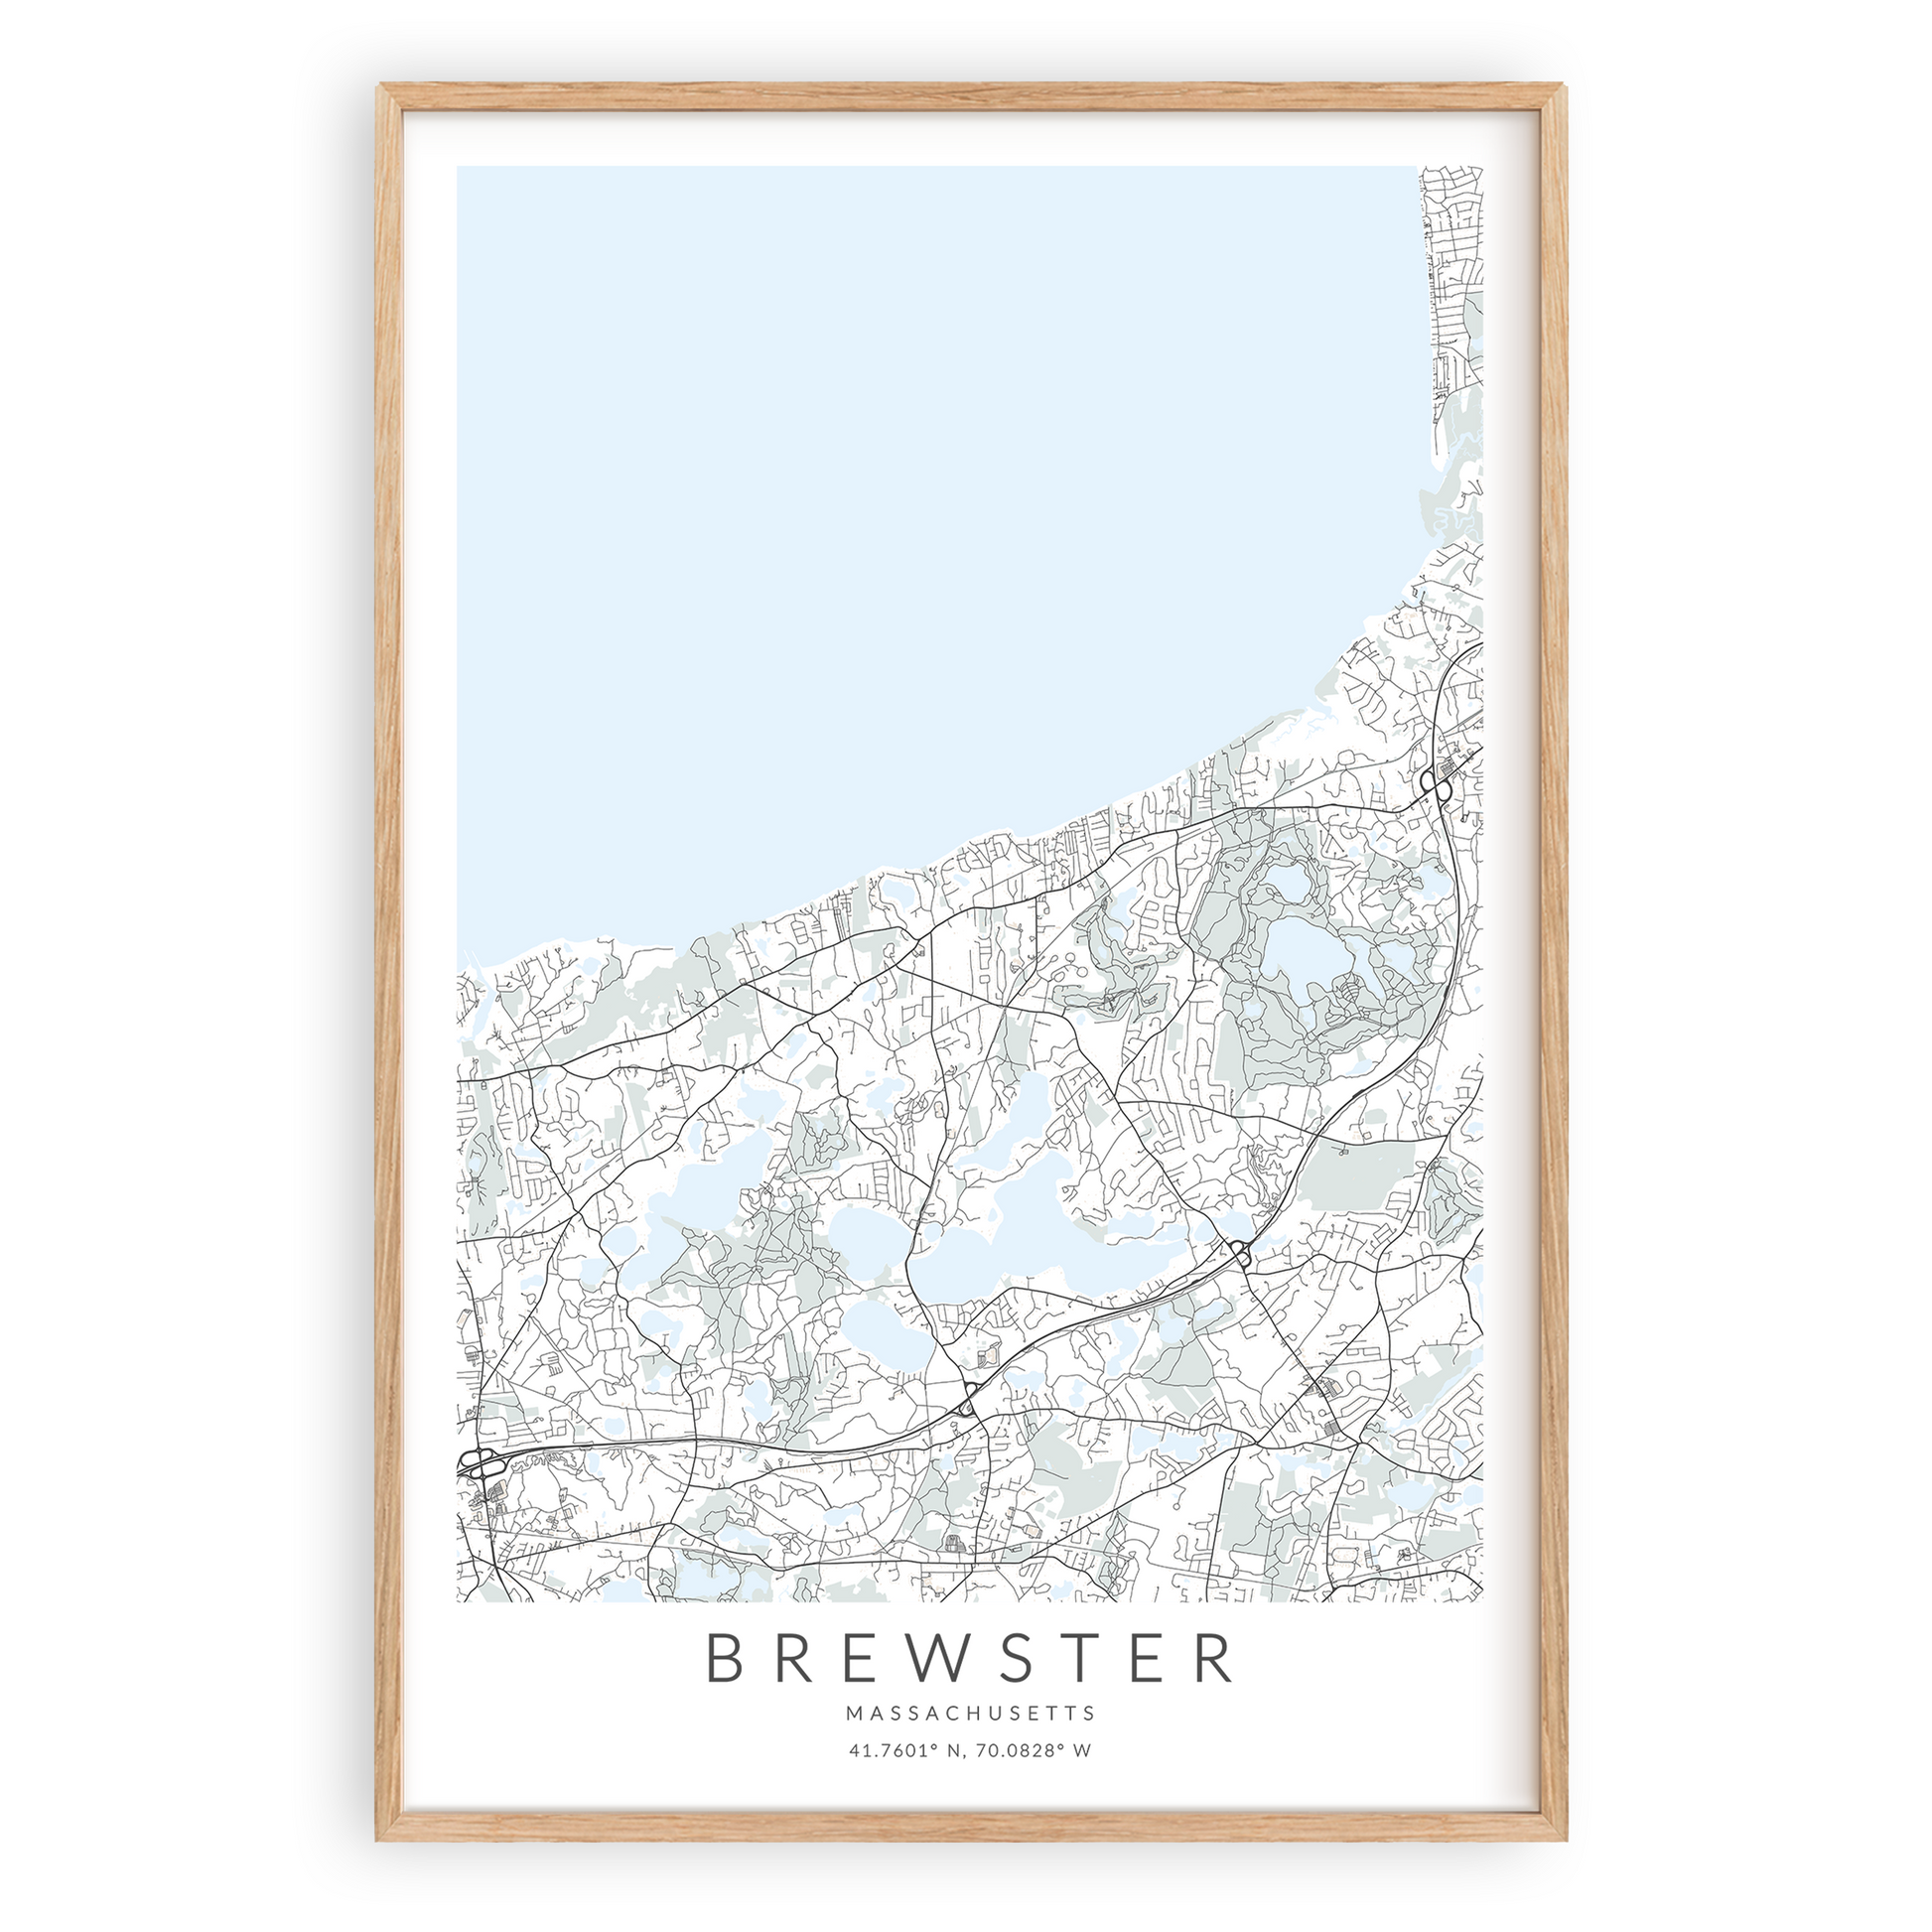 brewster massachusetts map print in wood frame on white background